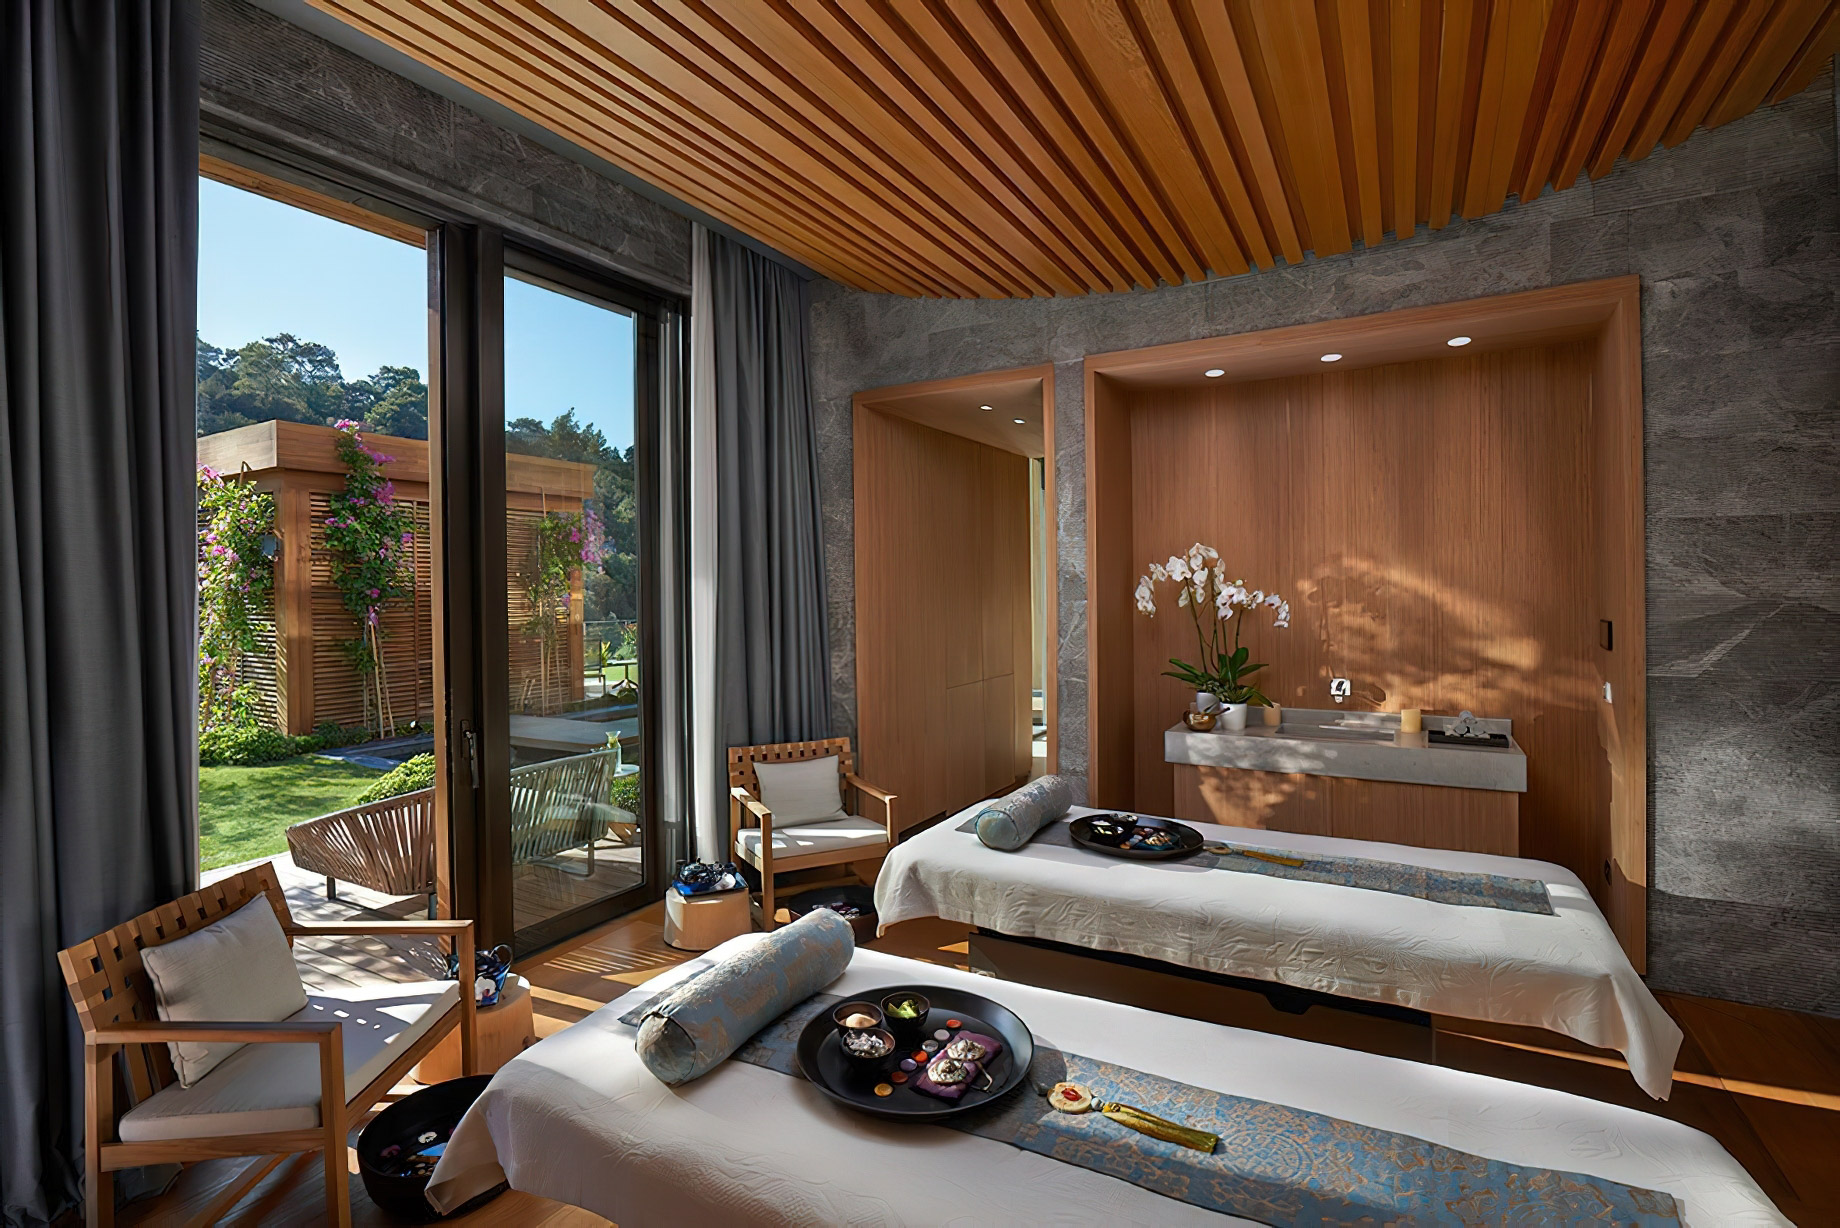 Mandarin Oriental, Bodrum Hotel – Bodrum, Turkey – Spa Treatment Room